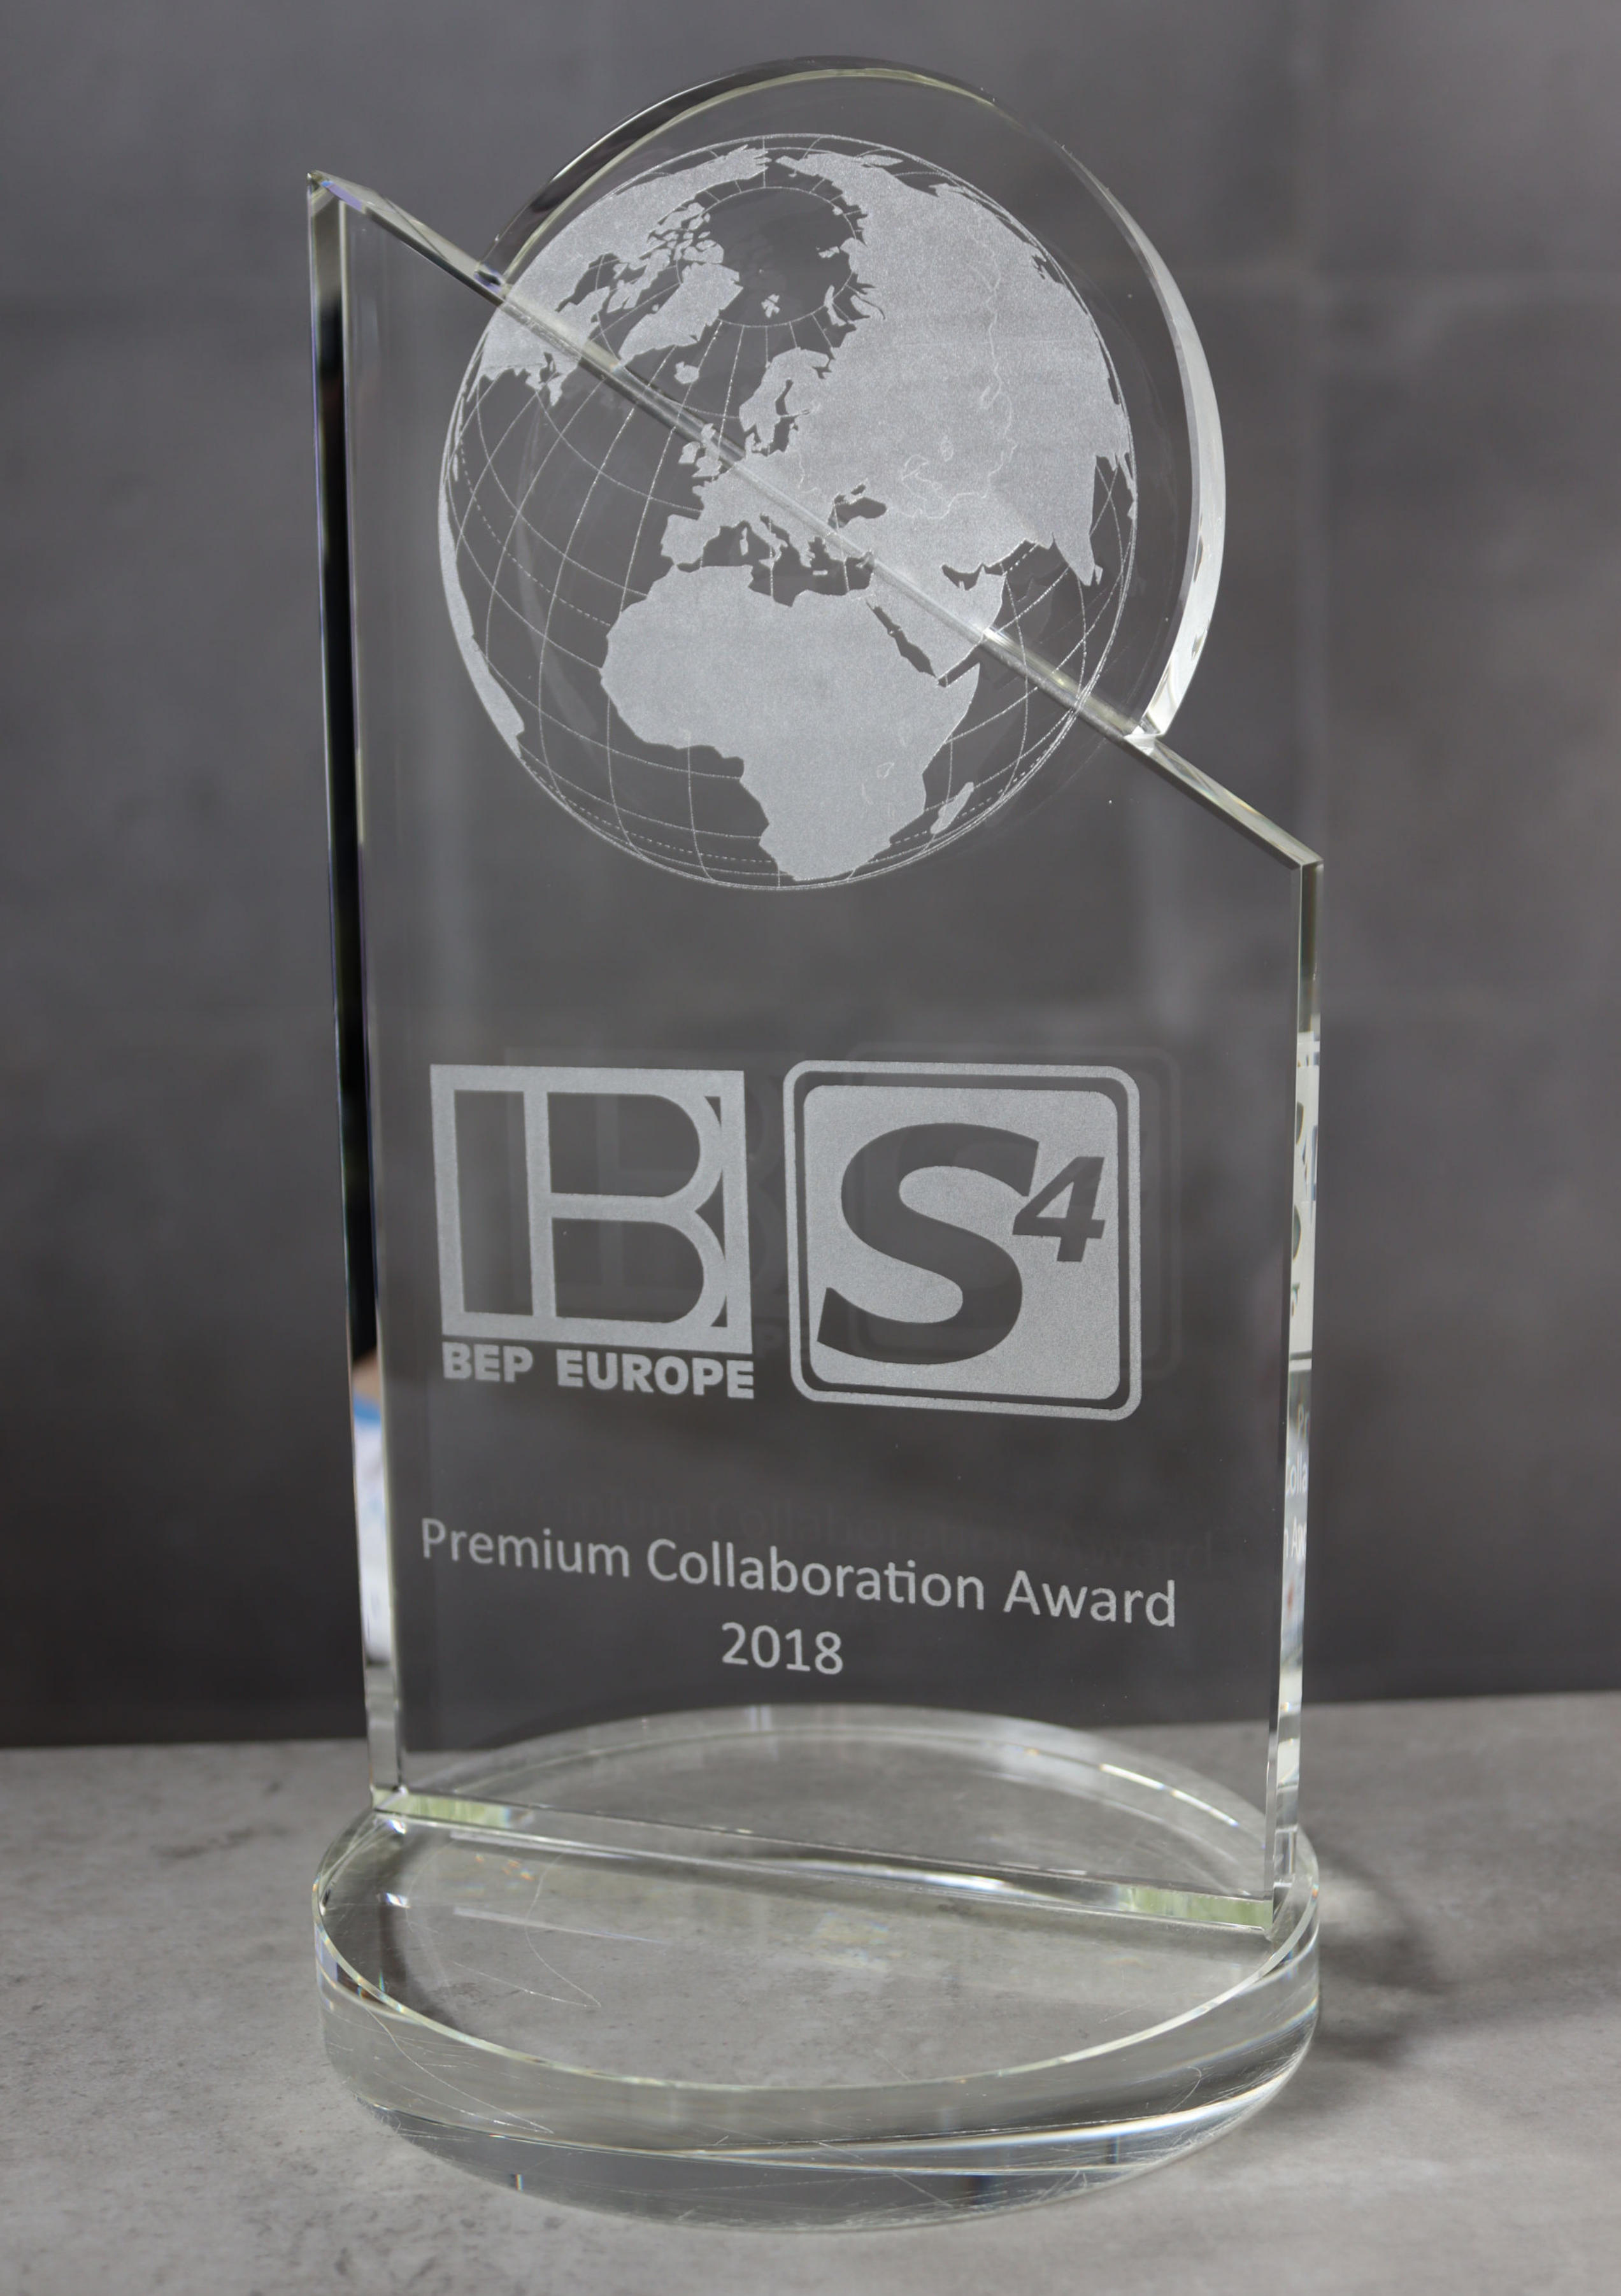 Premium Collaboration Award